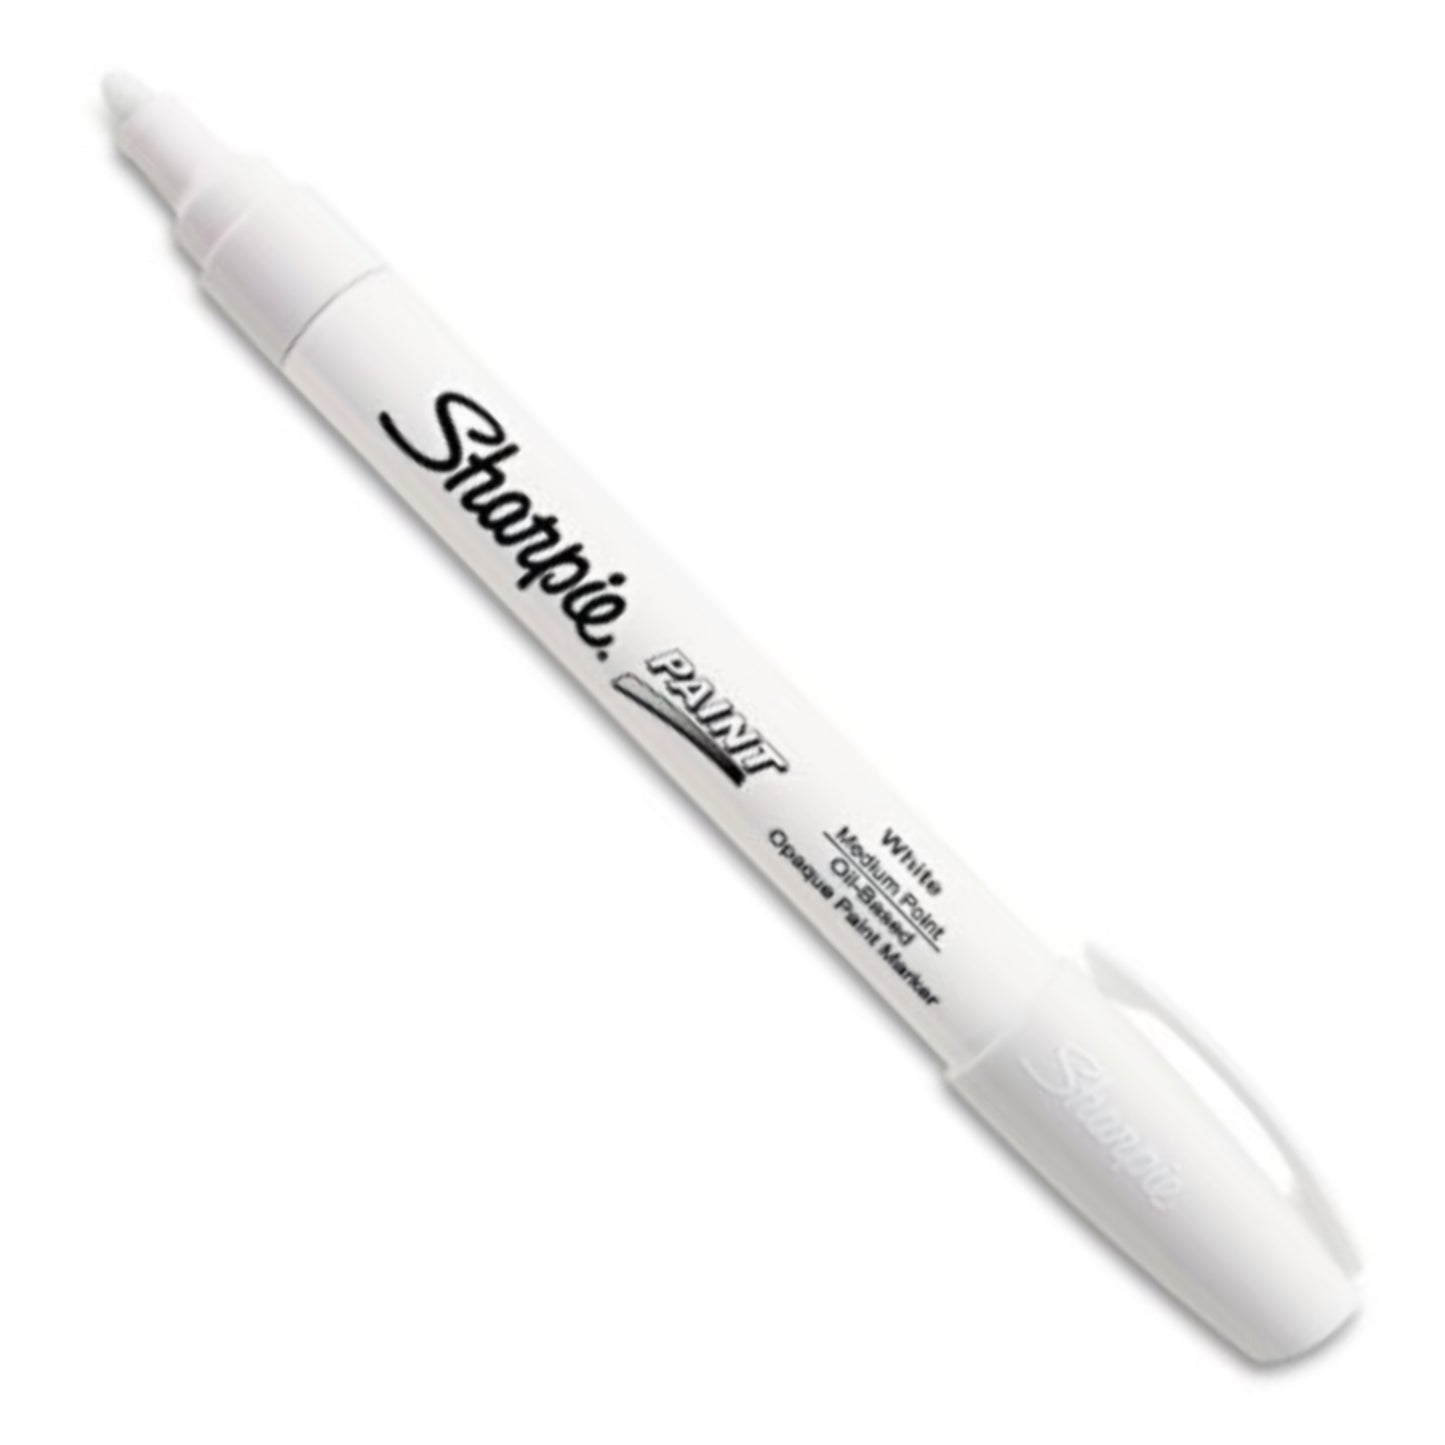 Sharpie • Oil-Based Paint Markers - White / Medium by Sharpie - K. A. Artist Shop